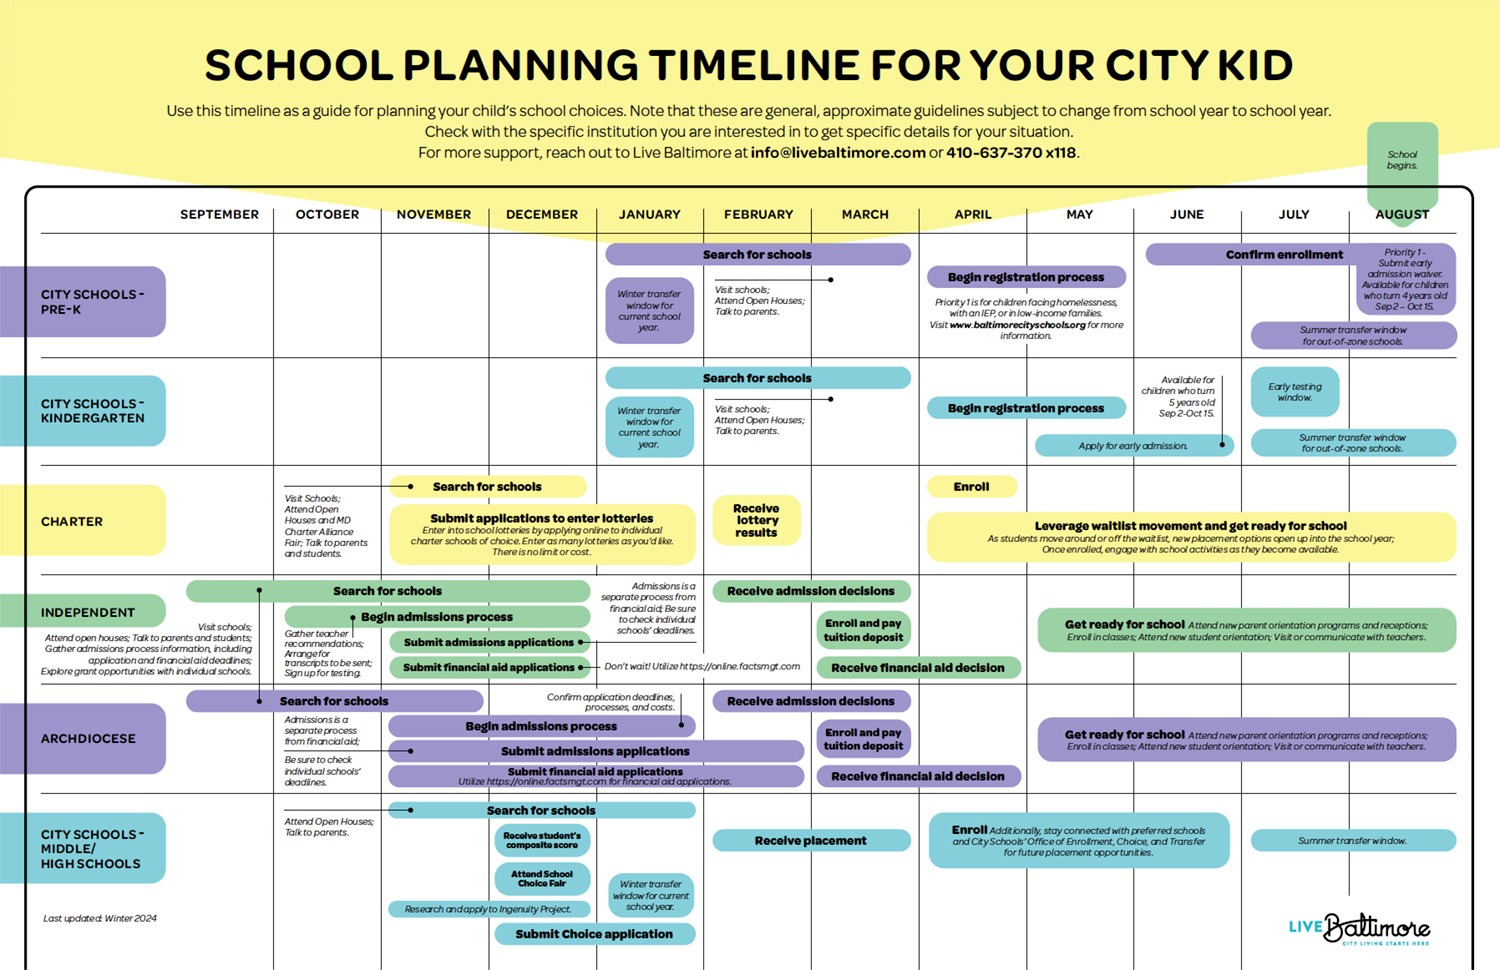 Download the School Planning Timline PDF here